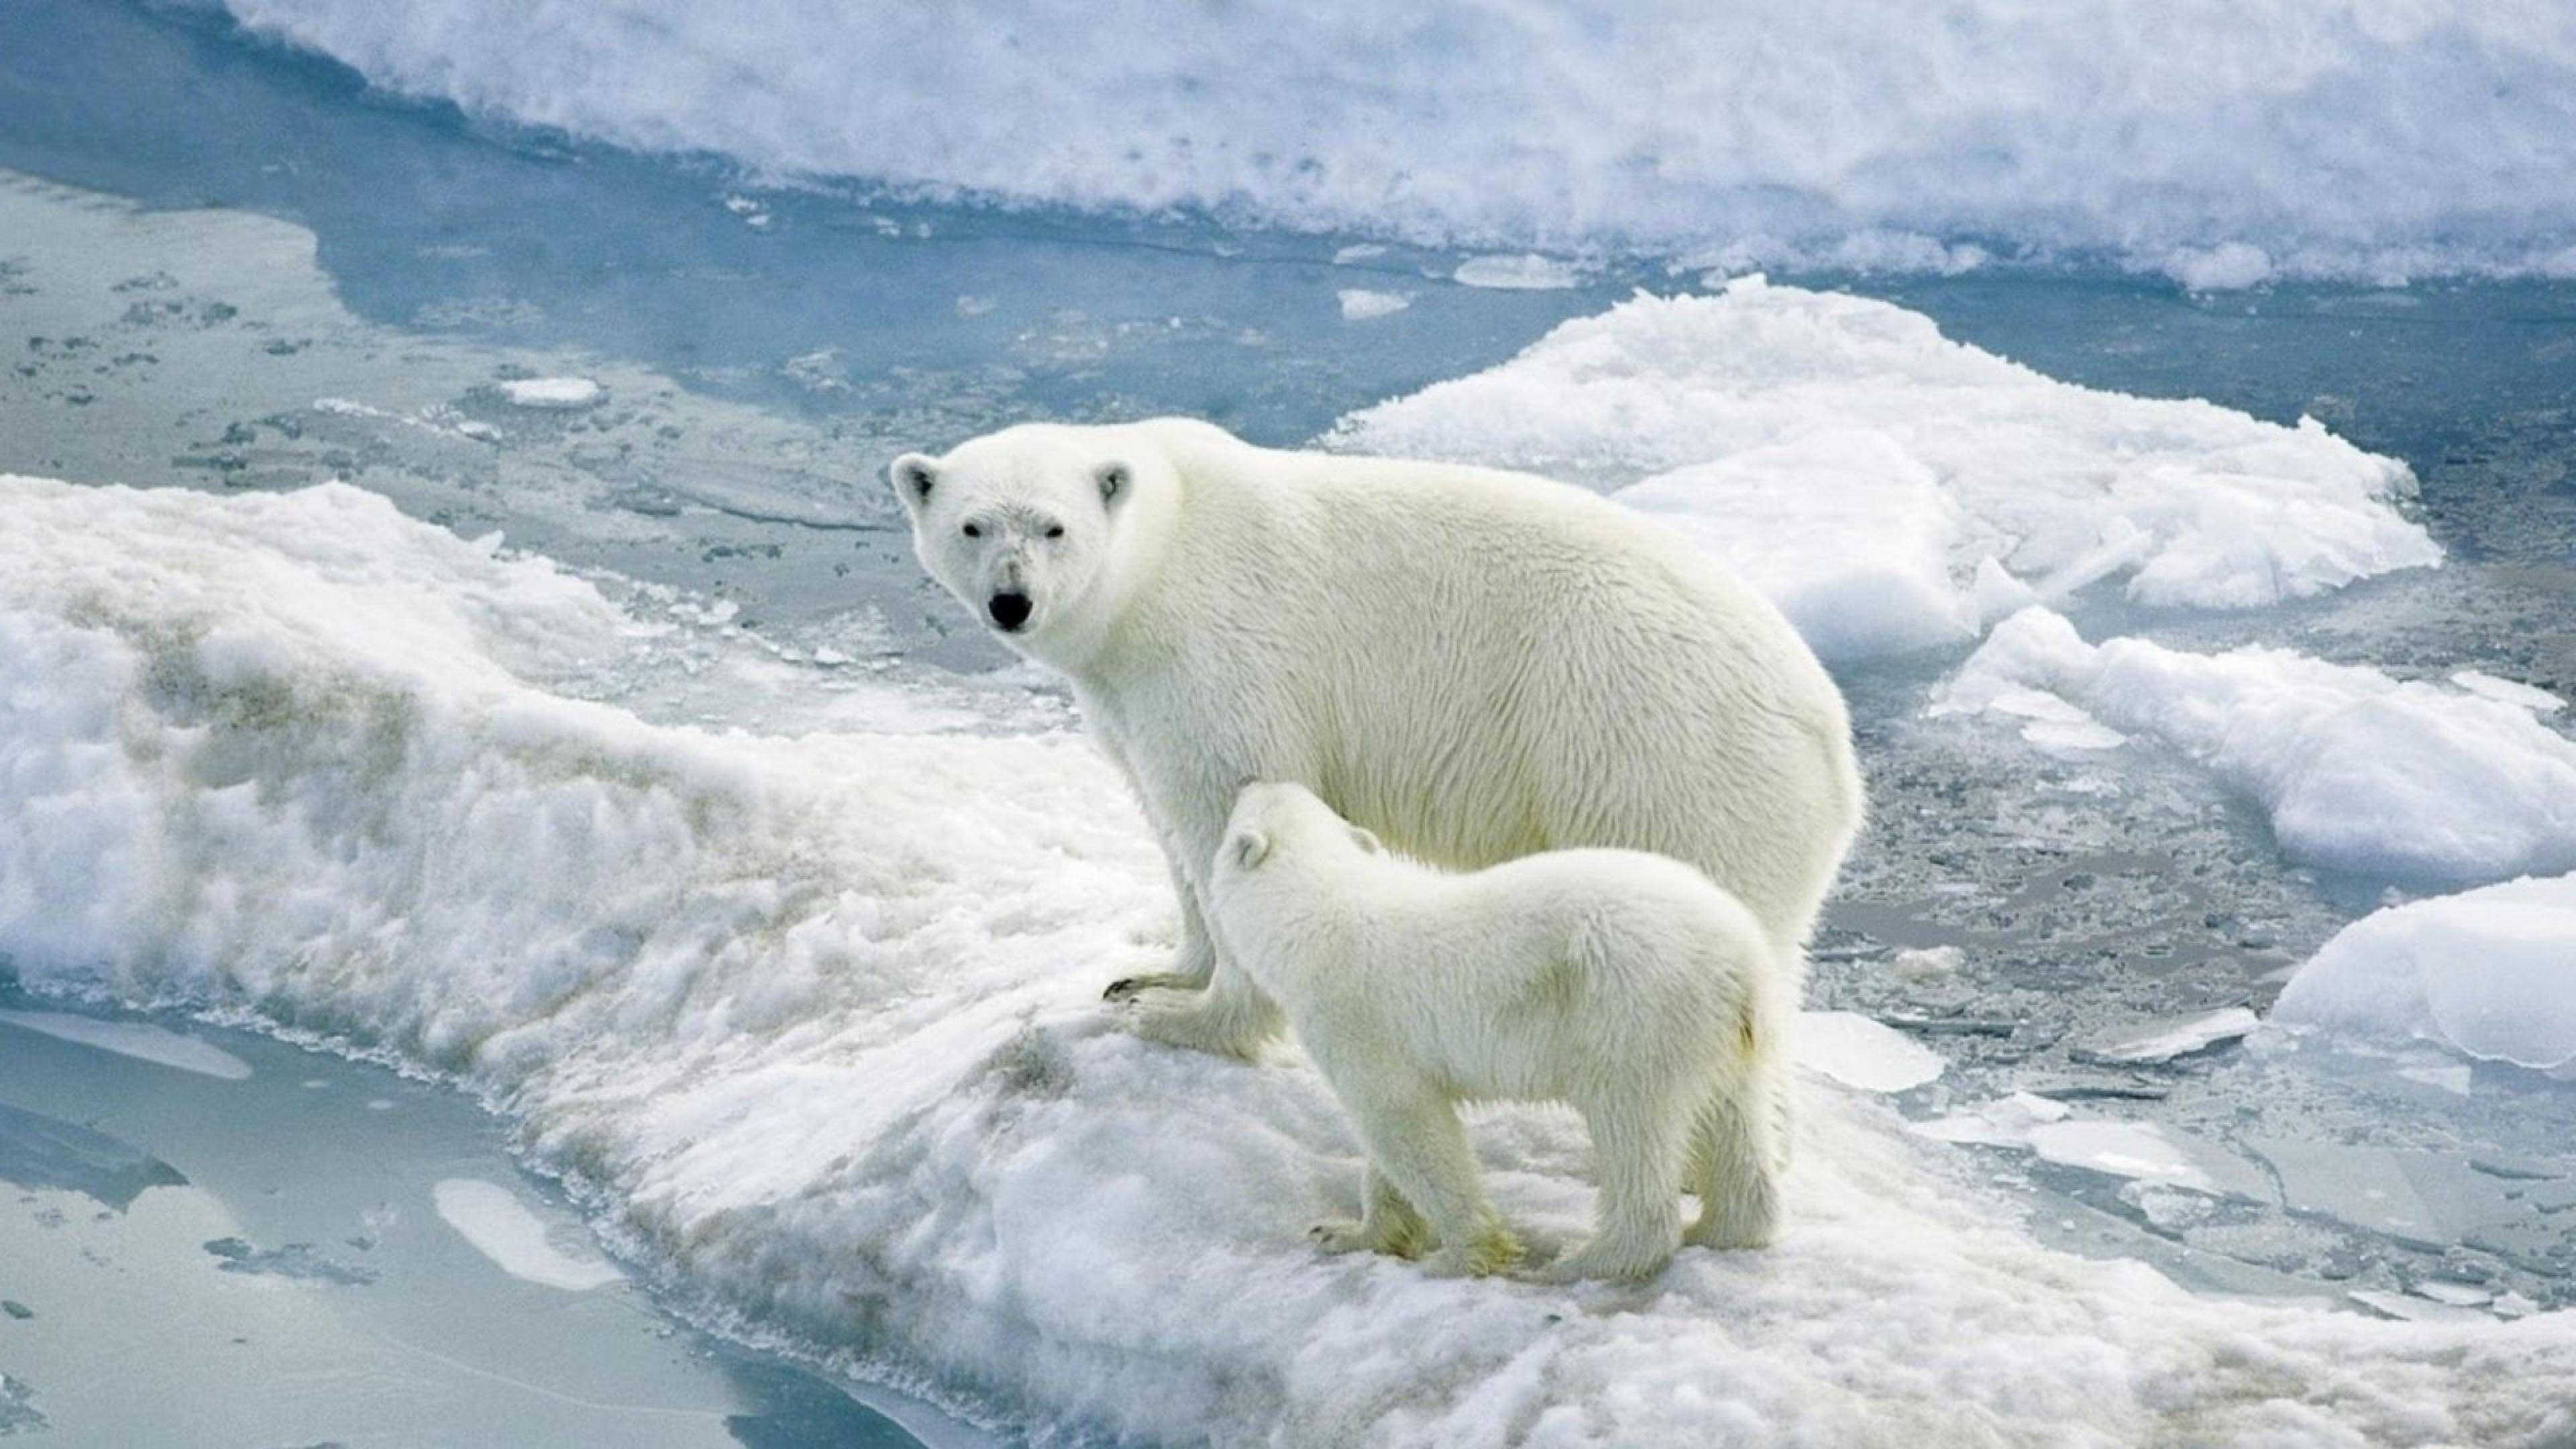 4K polar bear wallpaper, High-quality image, Free download, Incredible creature, 3840x2160 4K Desktop